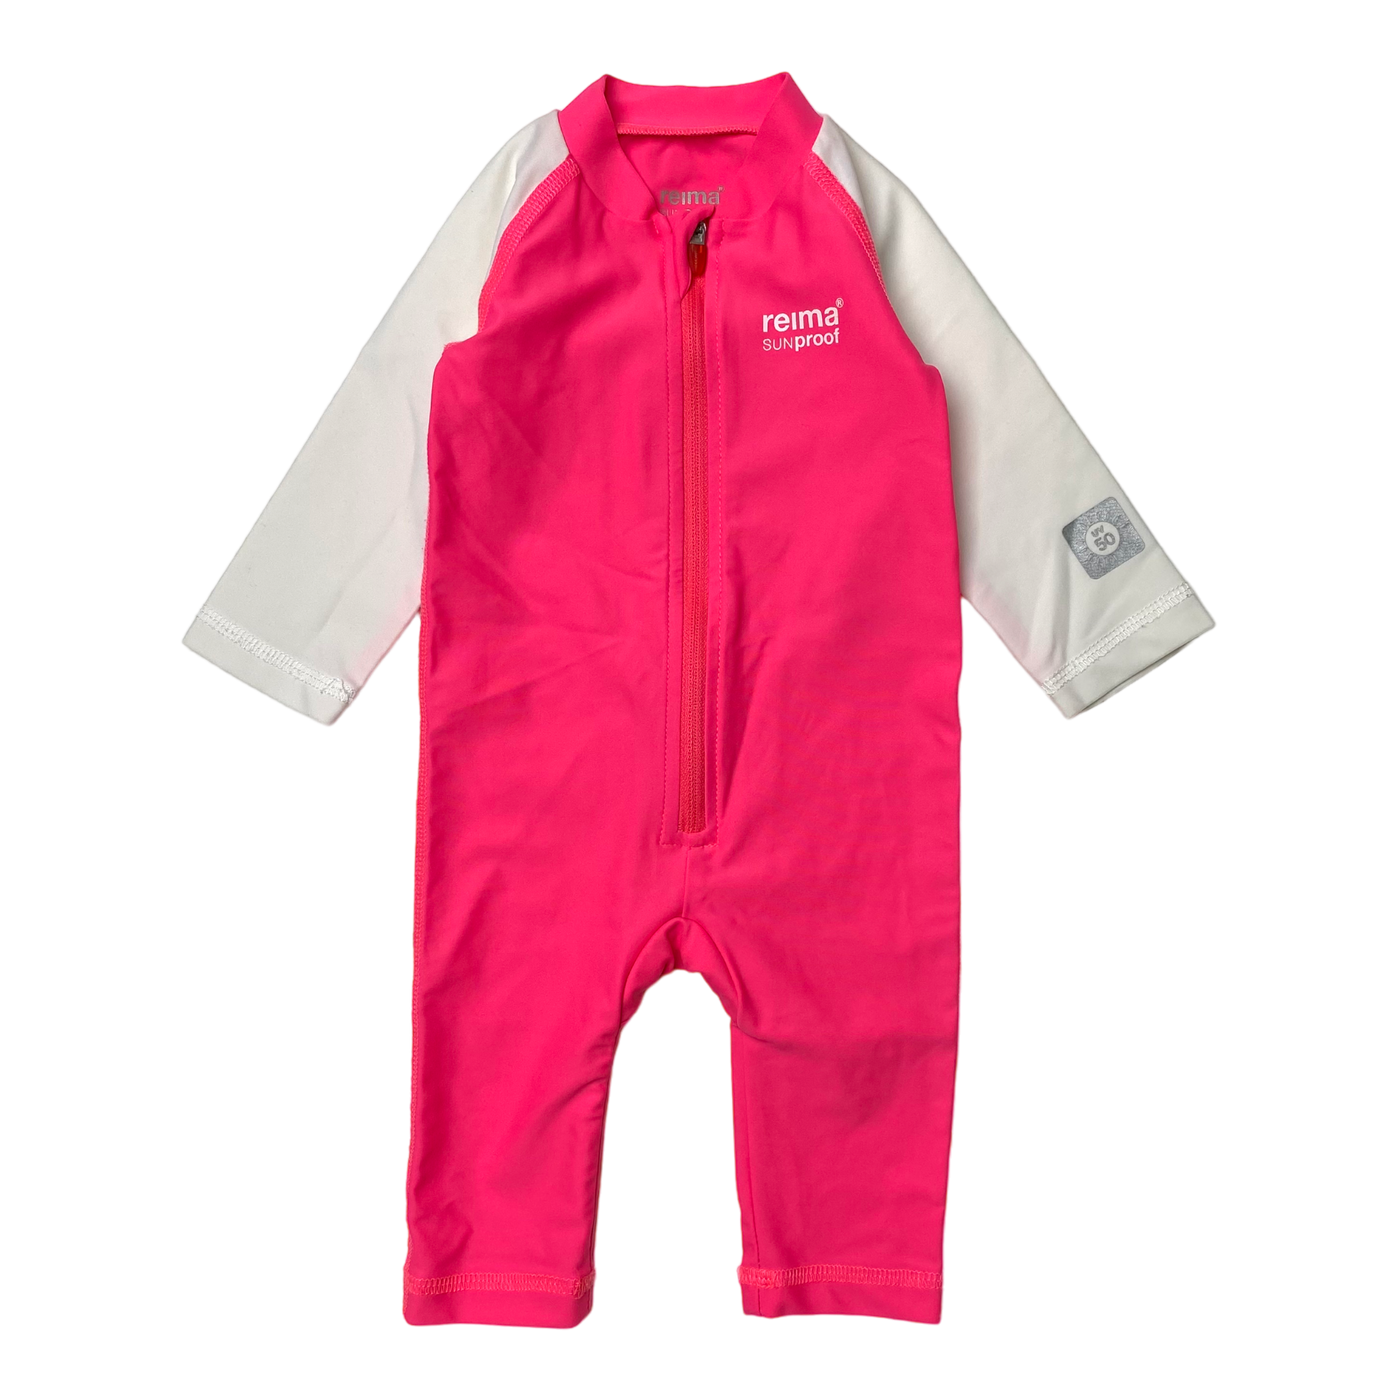 Reima UV swim suit, deep pink/white | 56cm